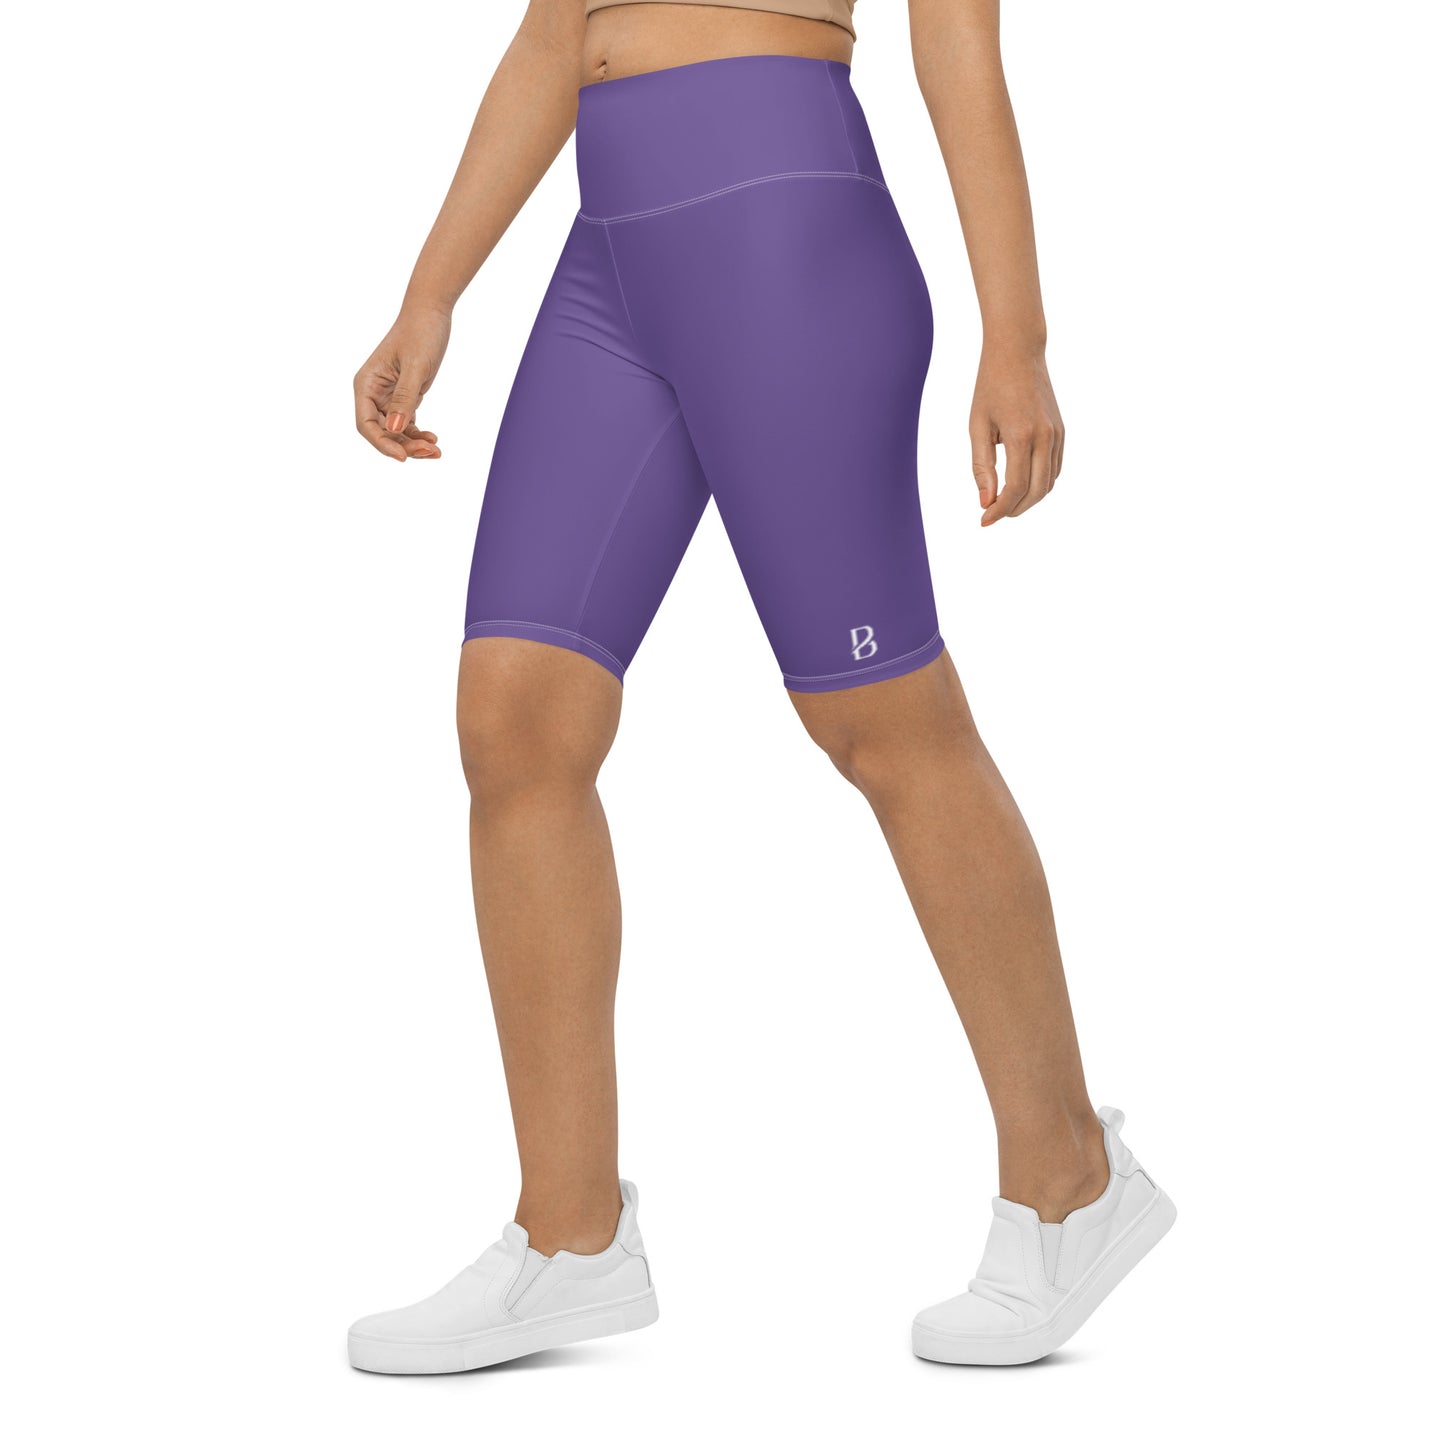 Purple "Born 2 Move" & "B" Biker Shorts